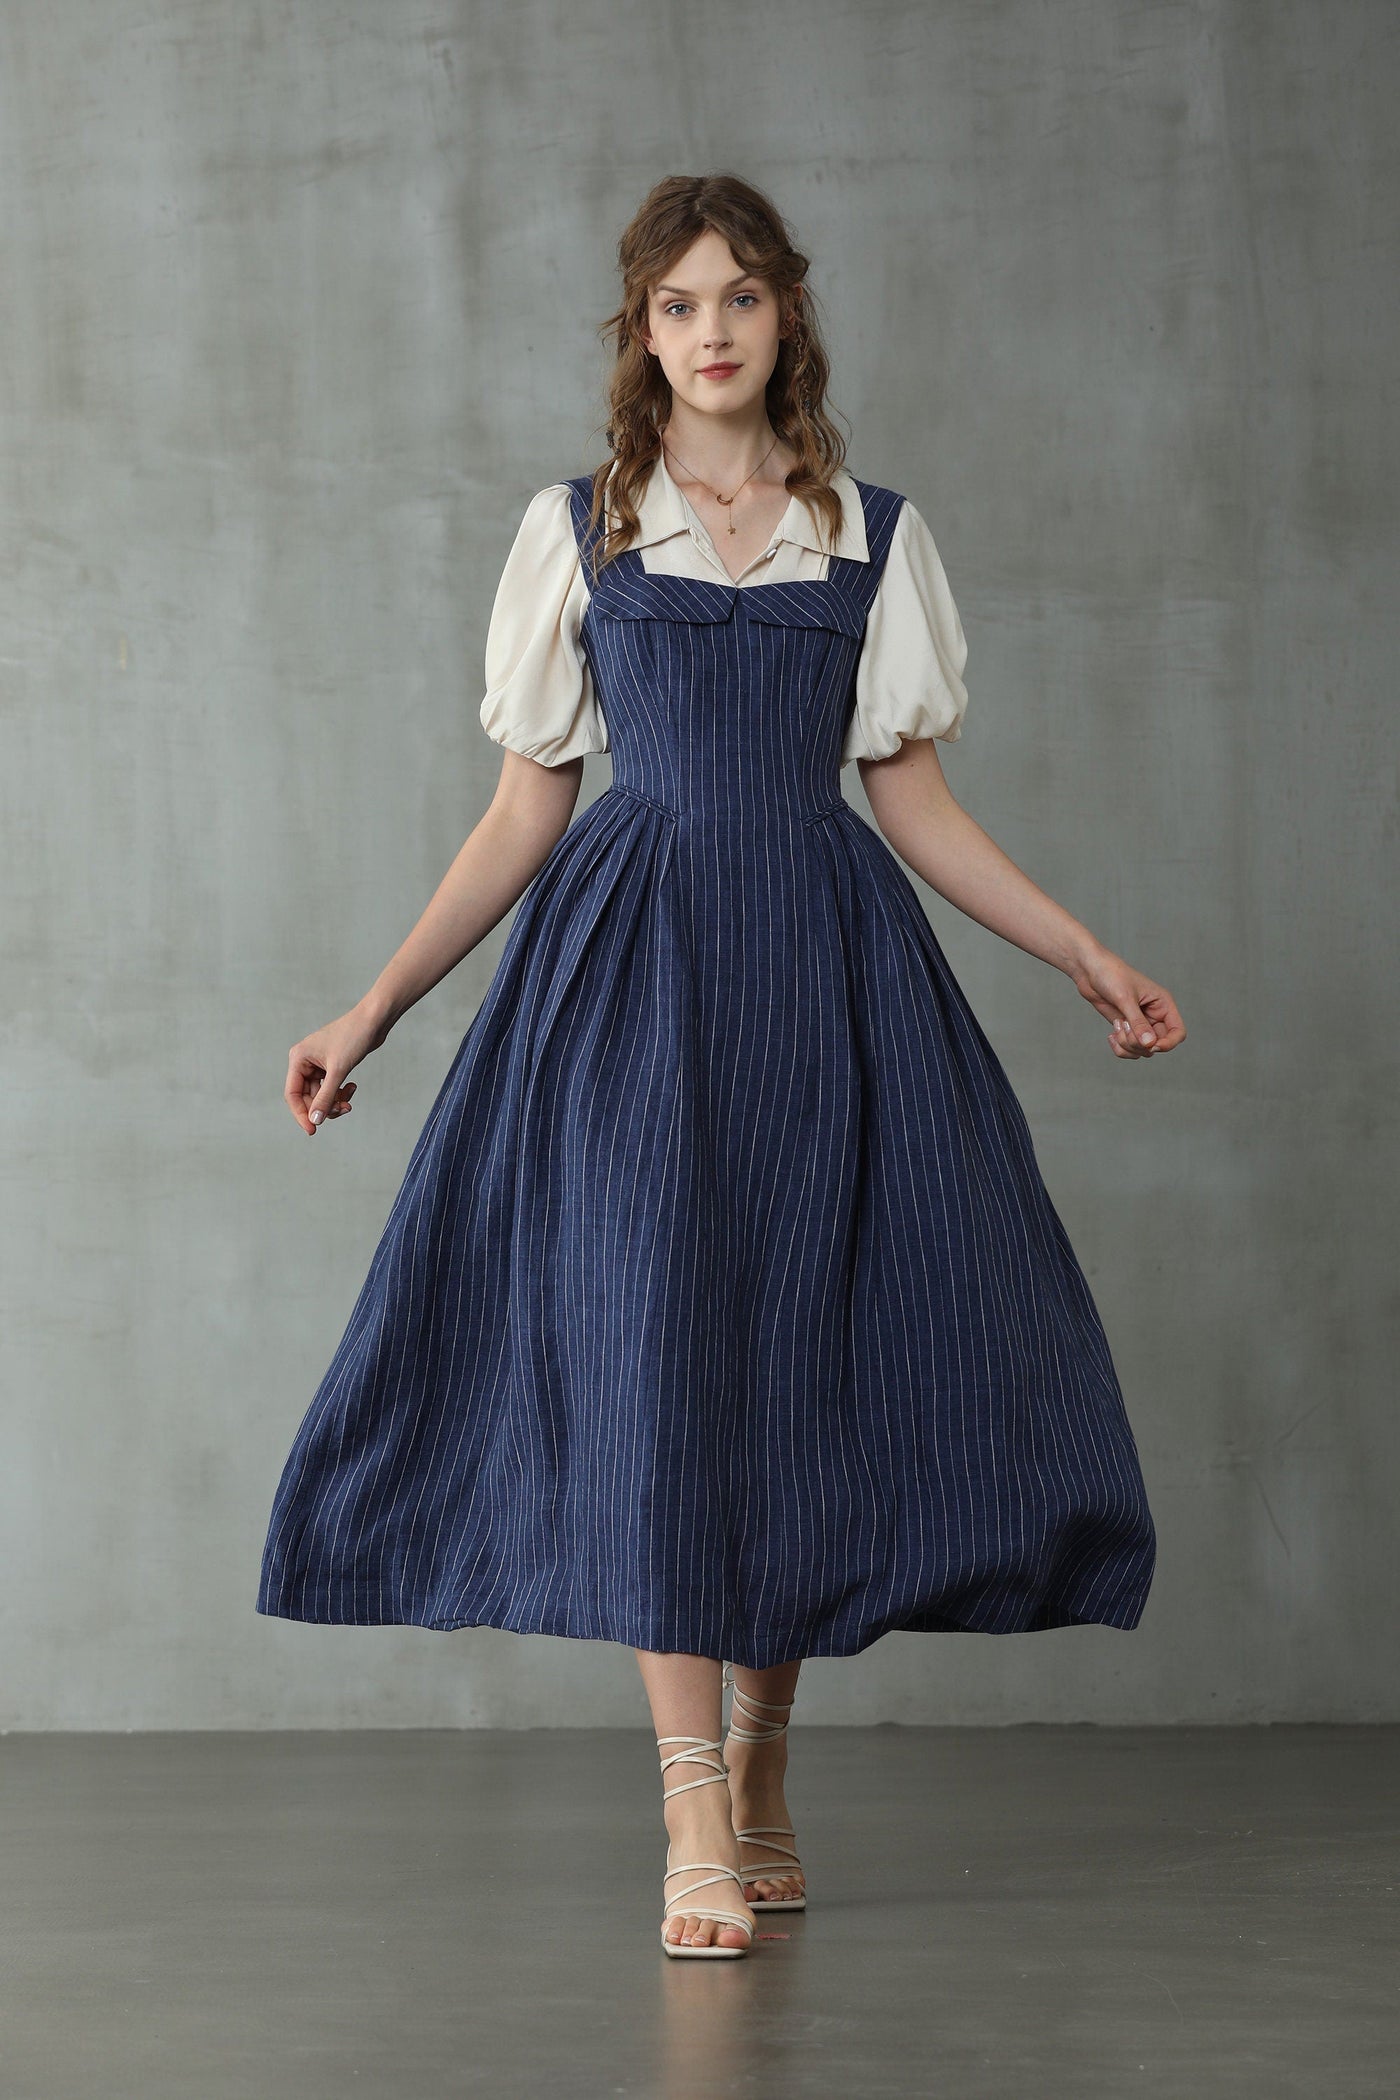 Dogwood 41| Striped Linen Halter Dress